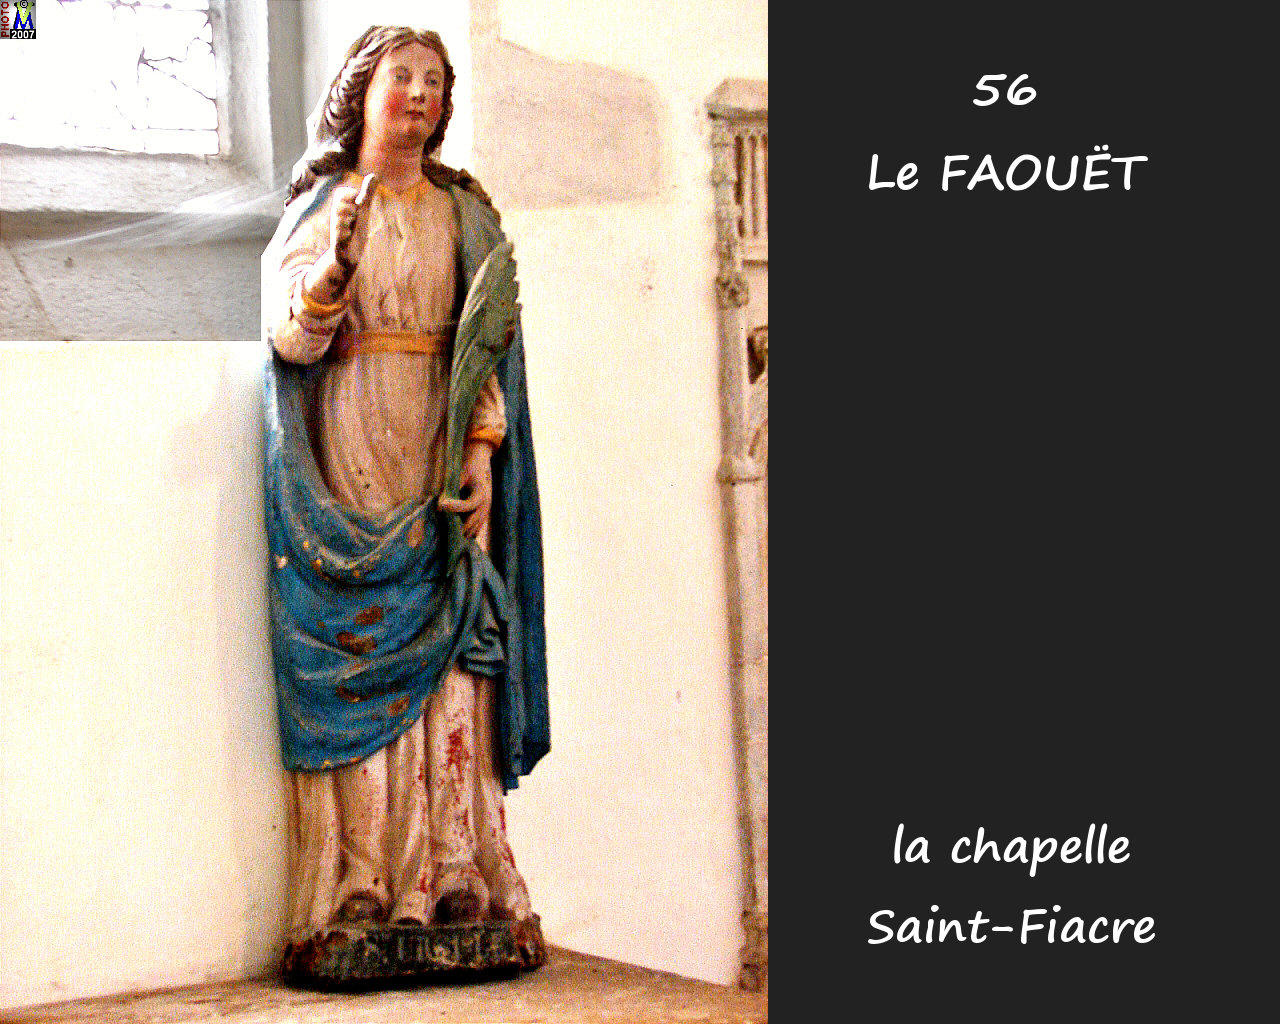 56FAOUET_chapelle-fiacre_336.jpg